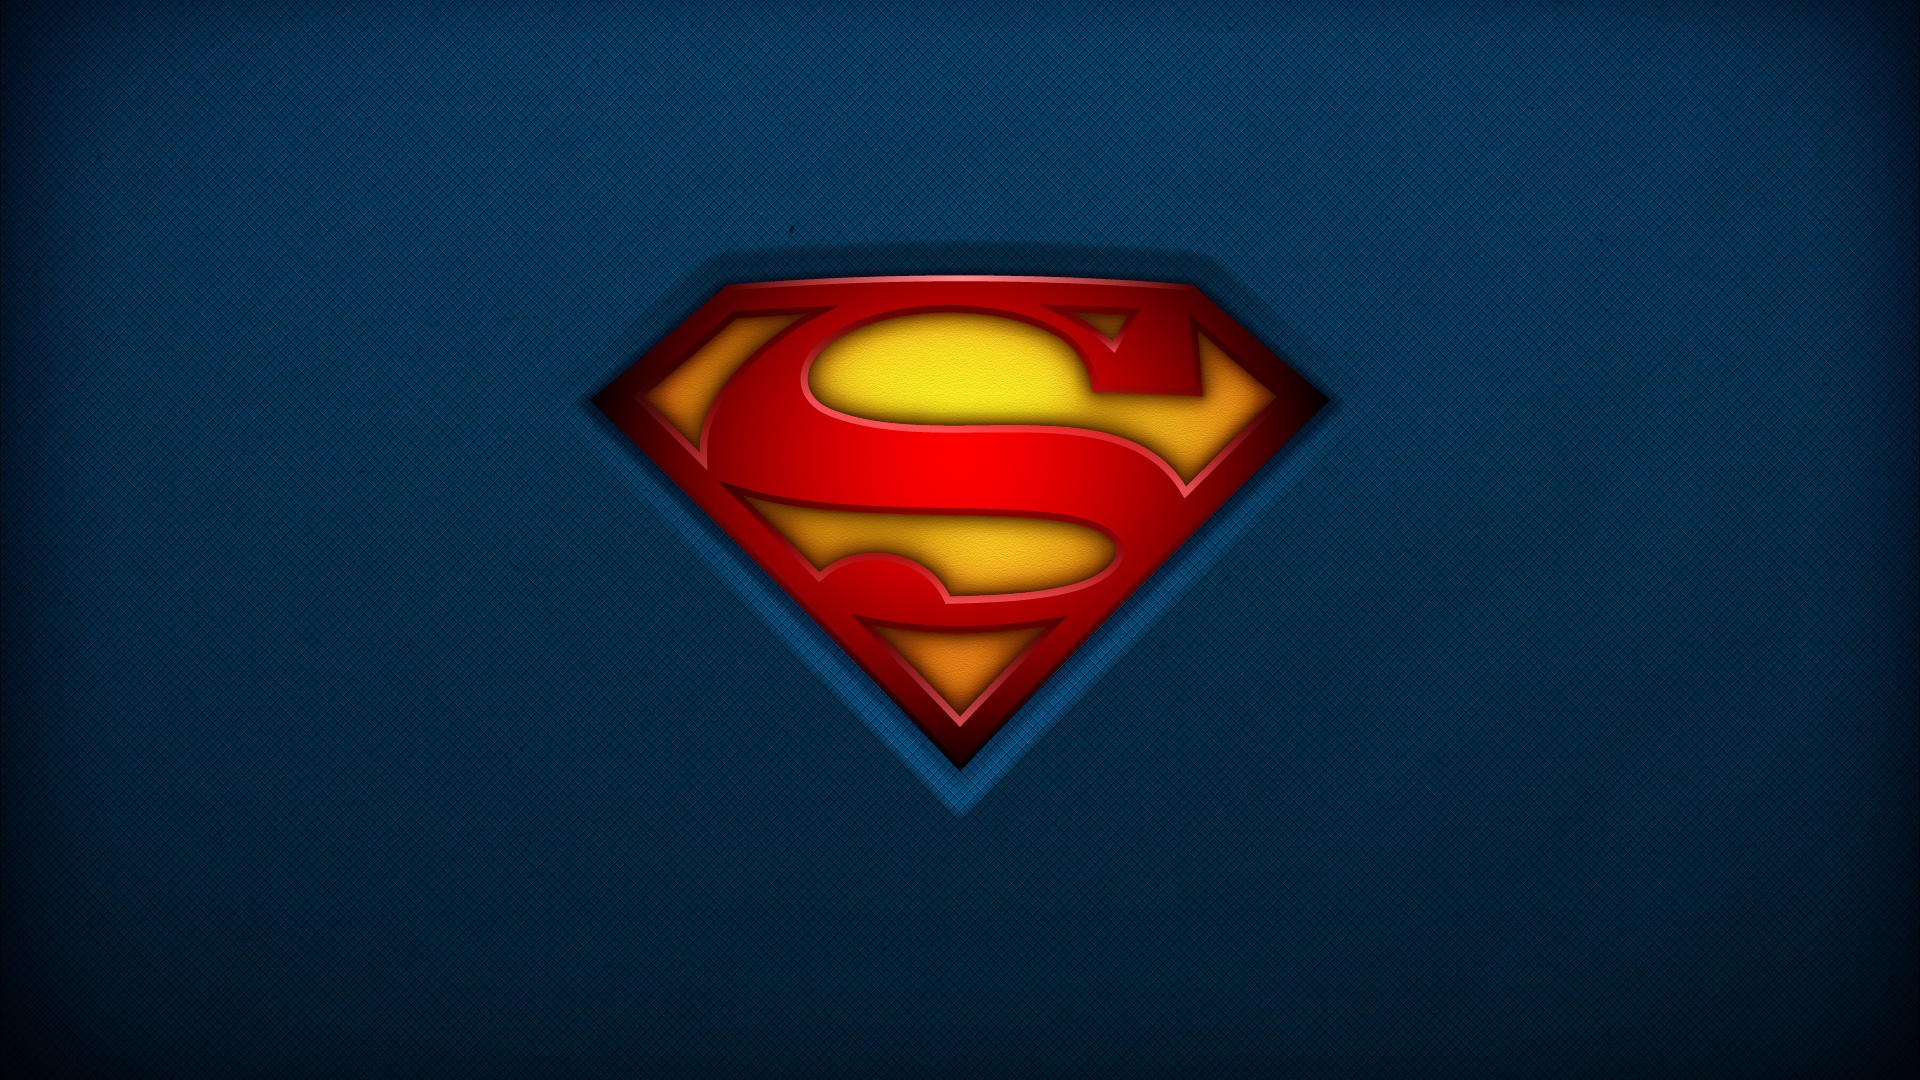 Superman logo wallpaper hd 1920x1080 danasrge.top